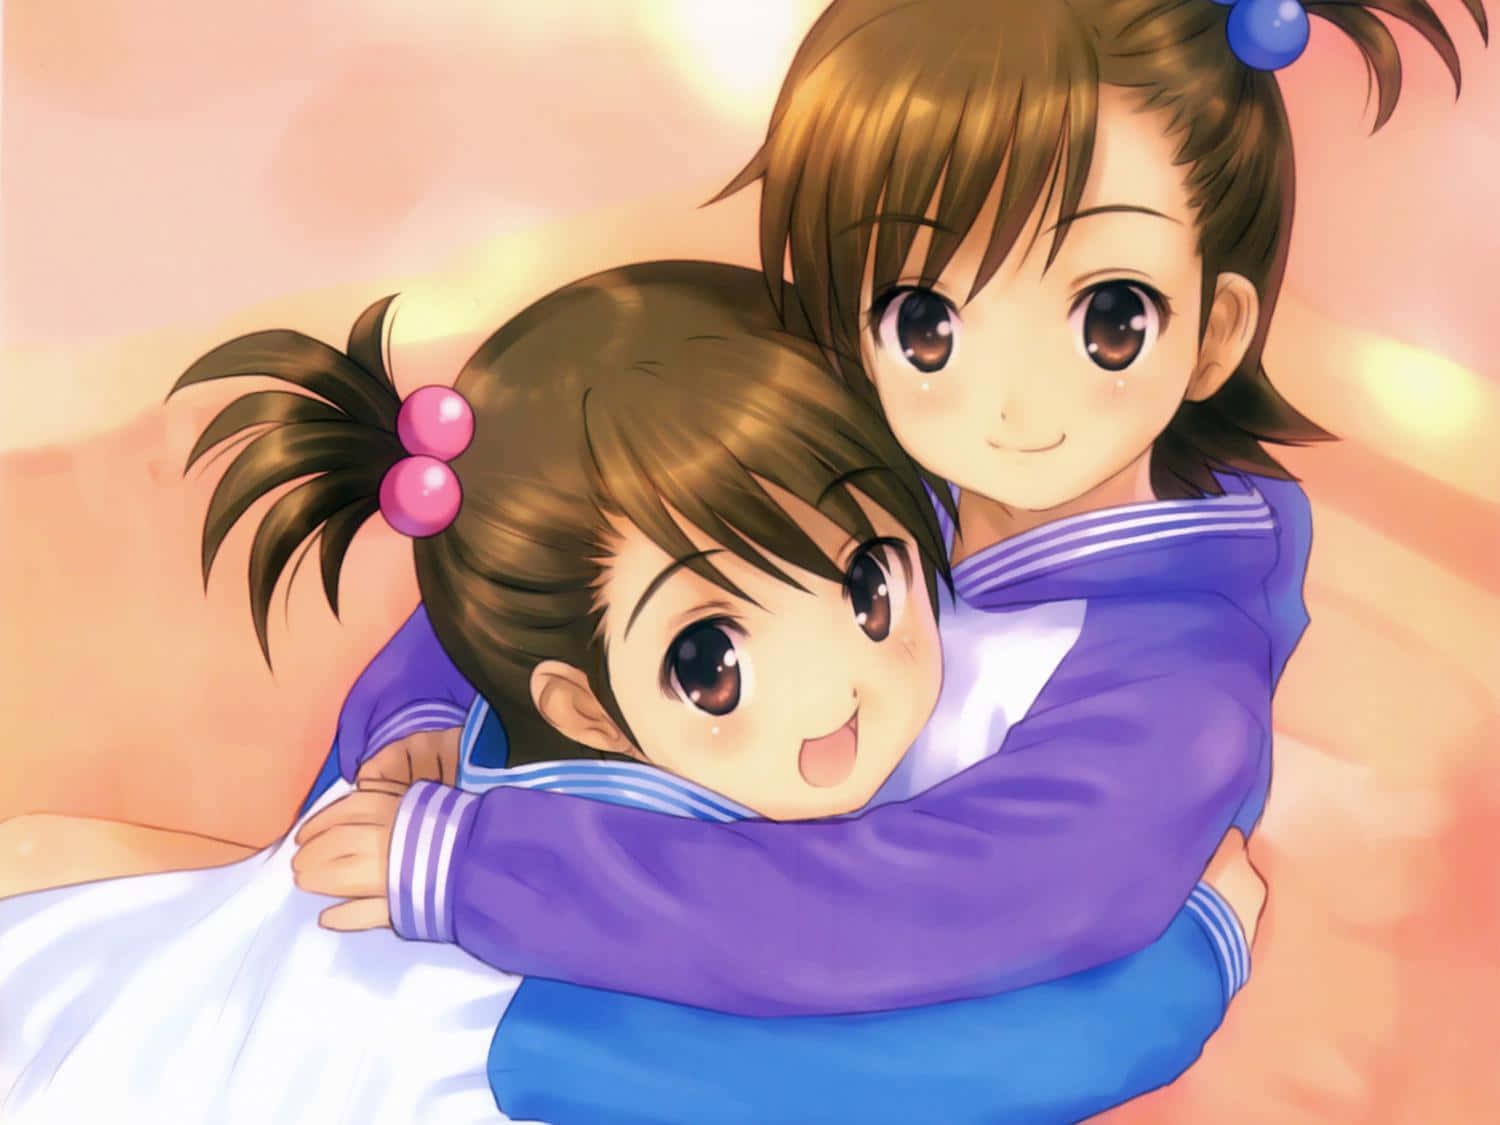 Amazing Anime Digital Artwork Of Cute Sisters Wallpaper